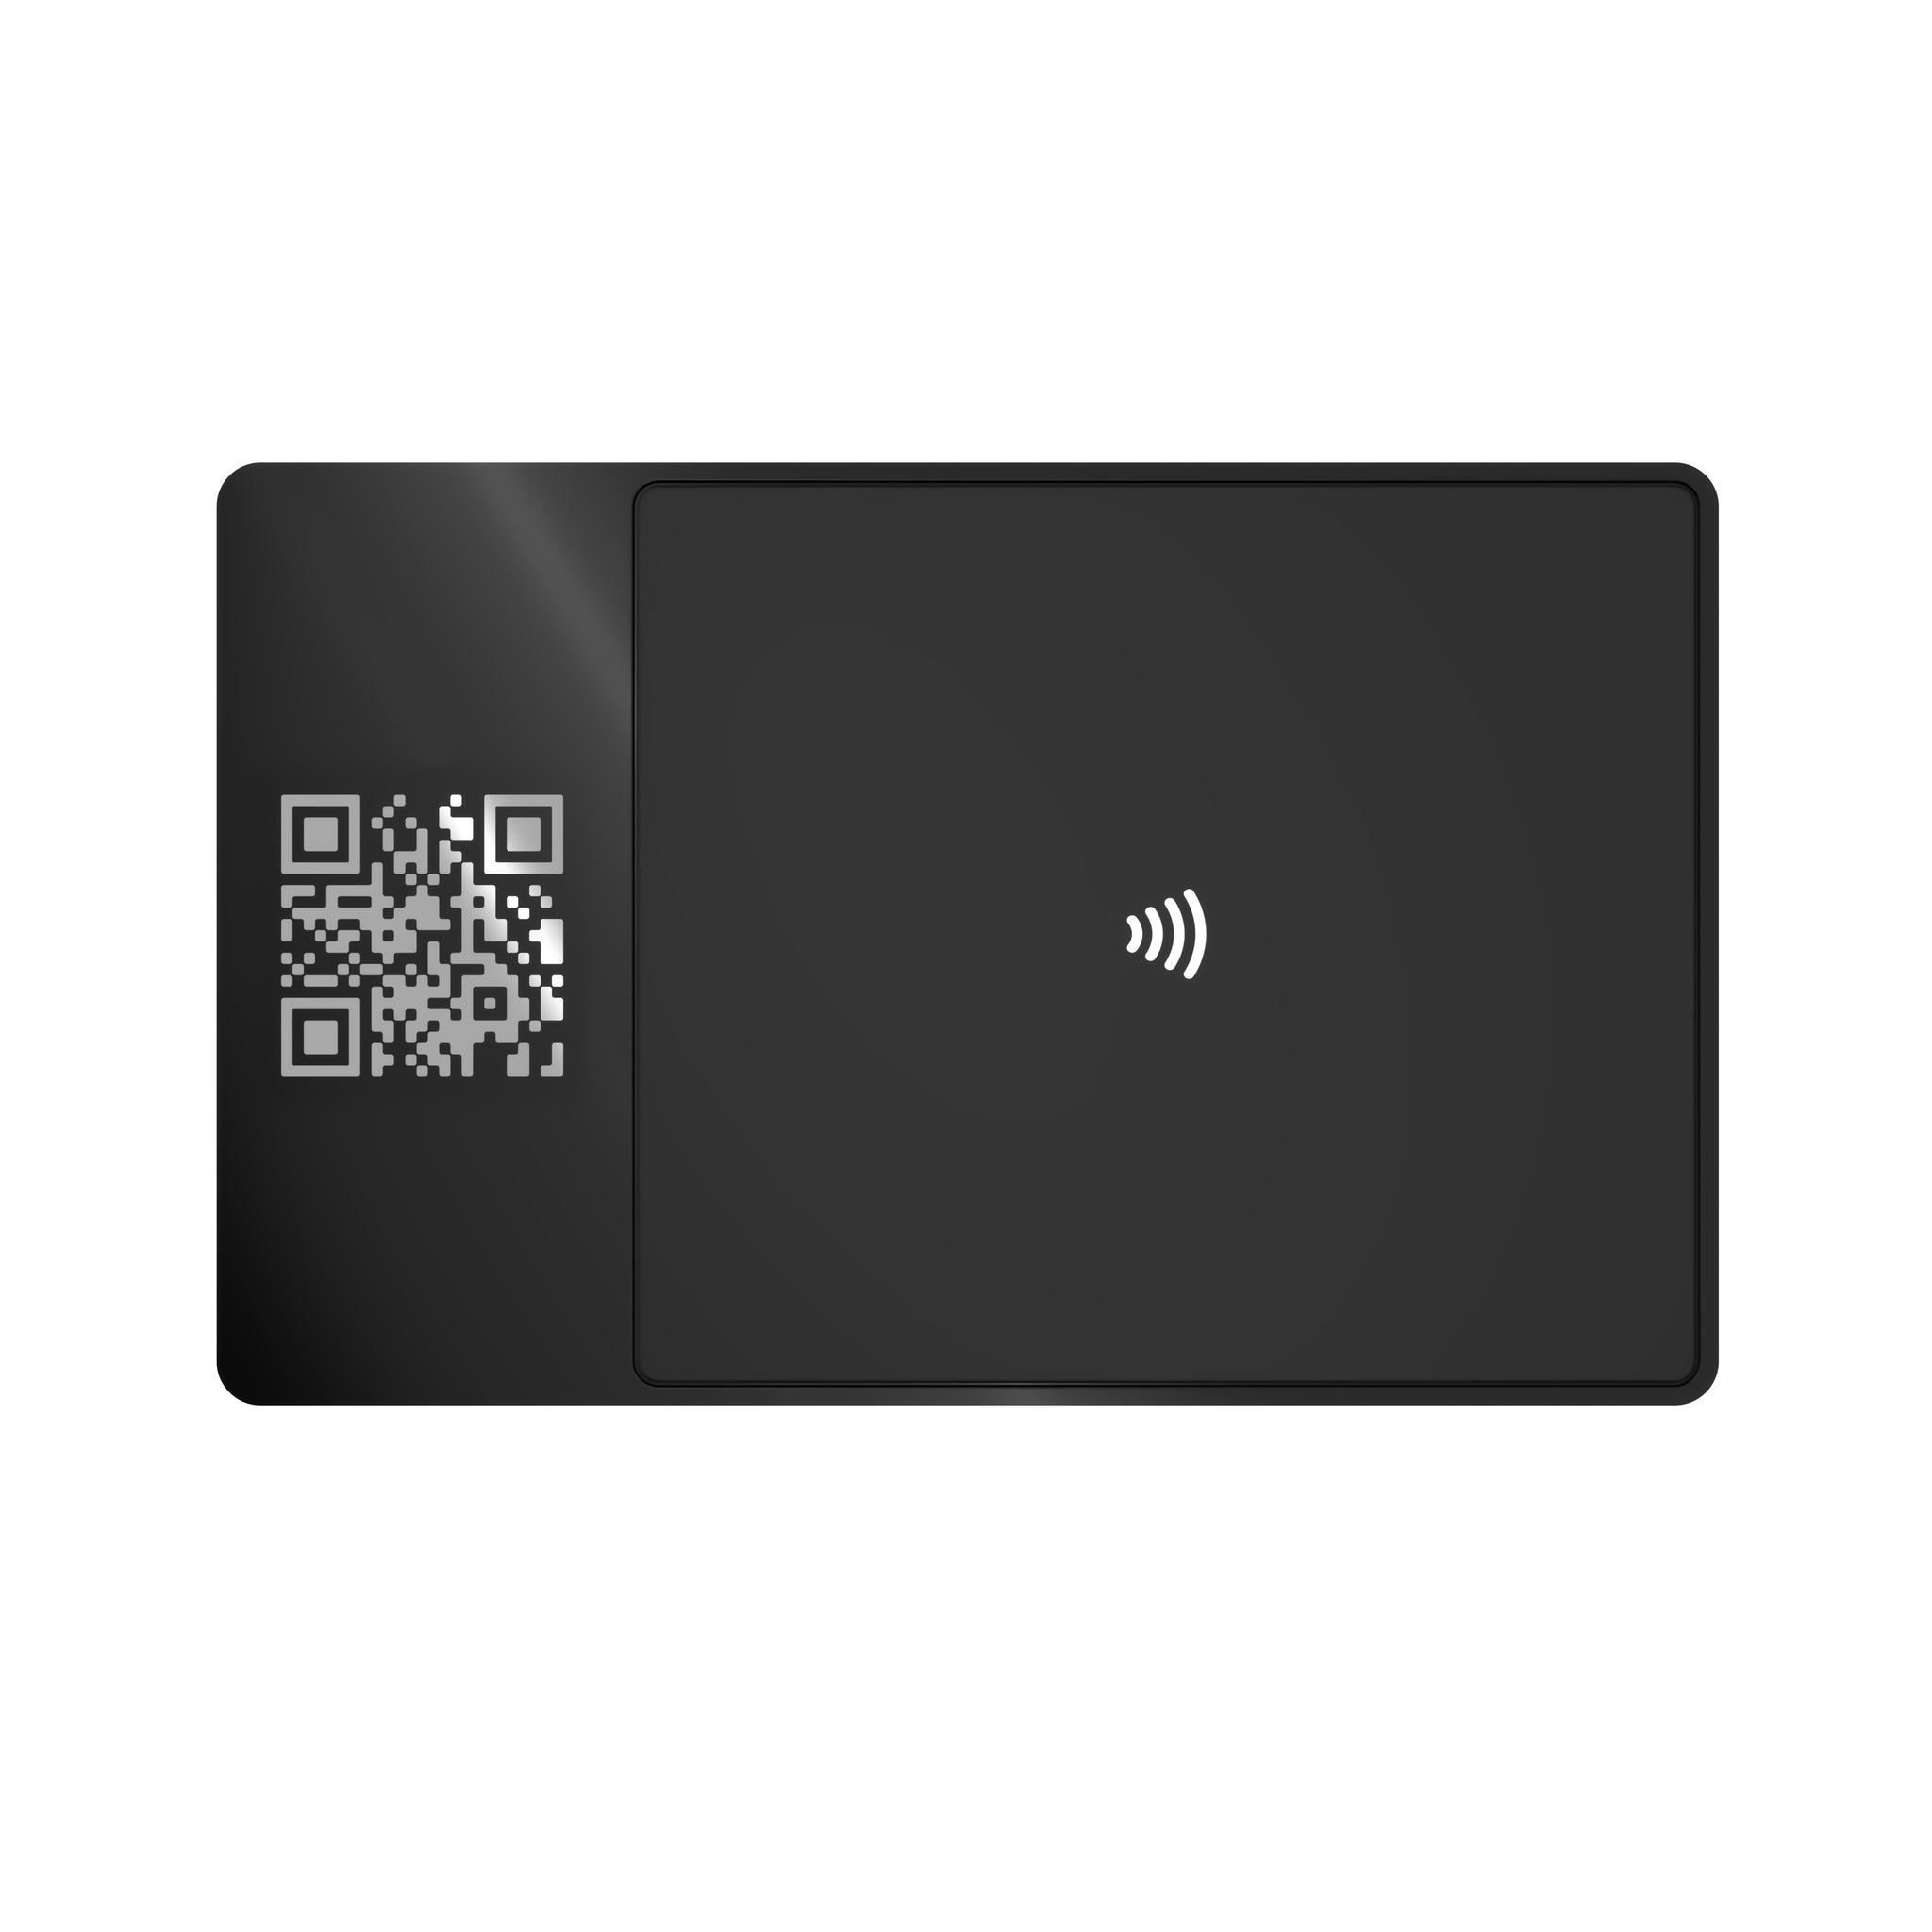 MyCircle NFC Metal Card v1 - MyCircle